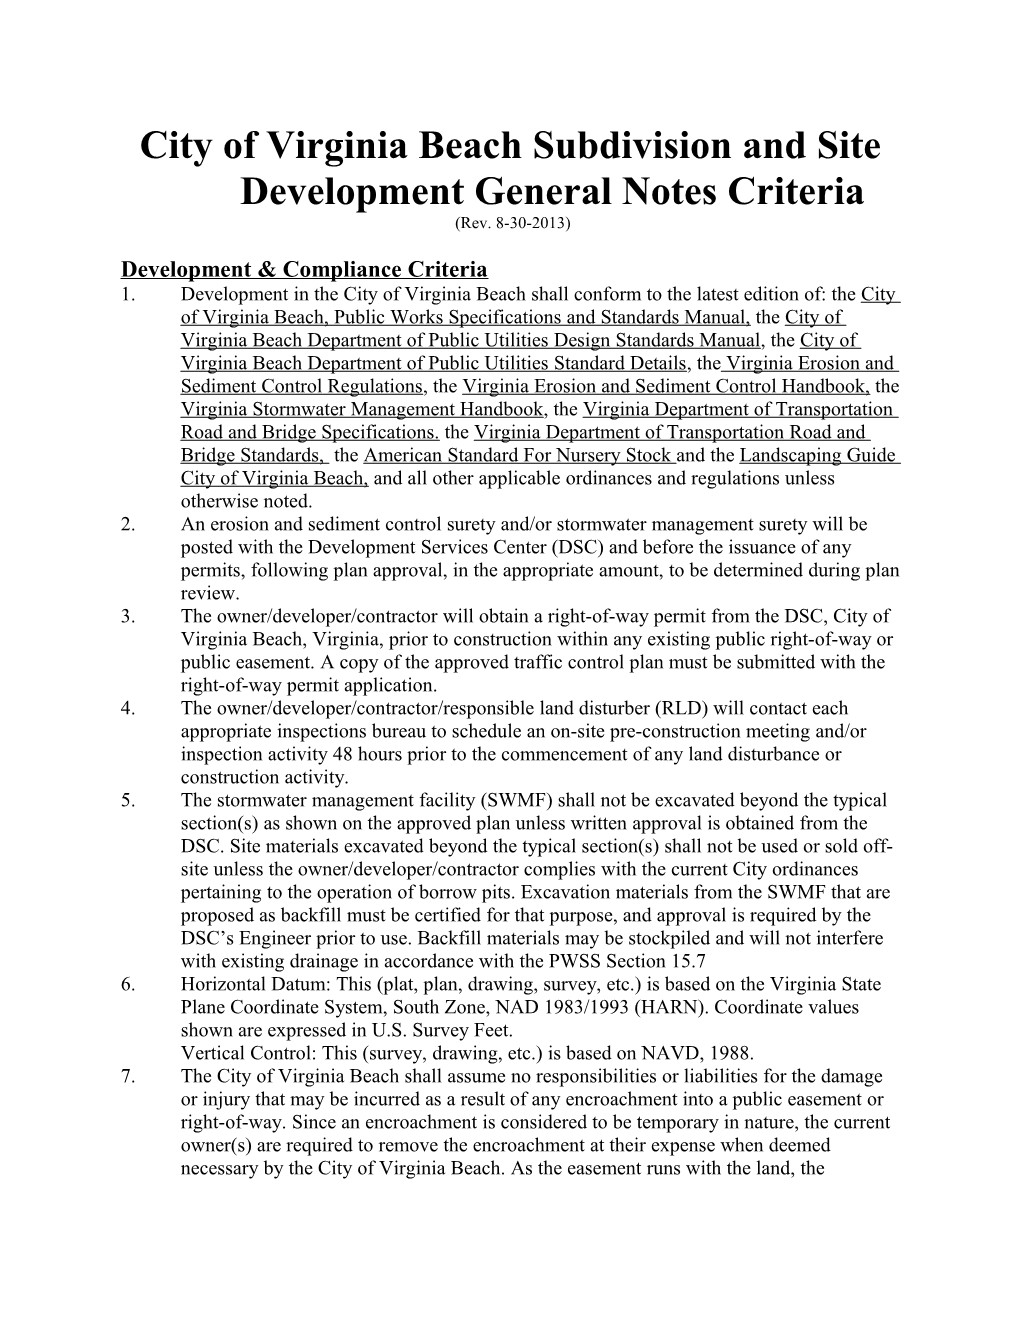 City of Virginia Beach Subdivision and Site Development General Notes Criteria